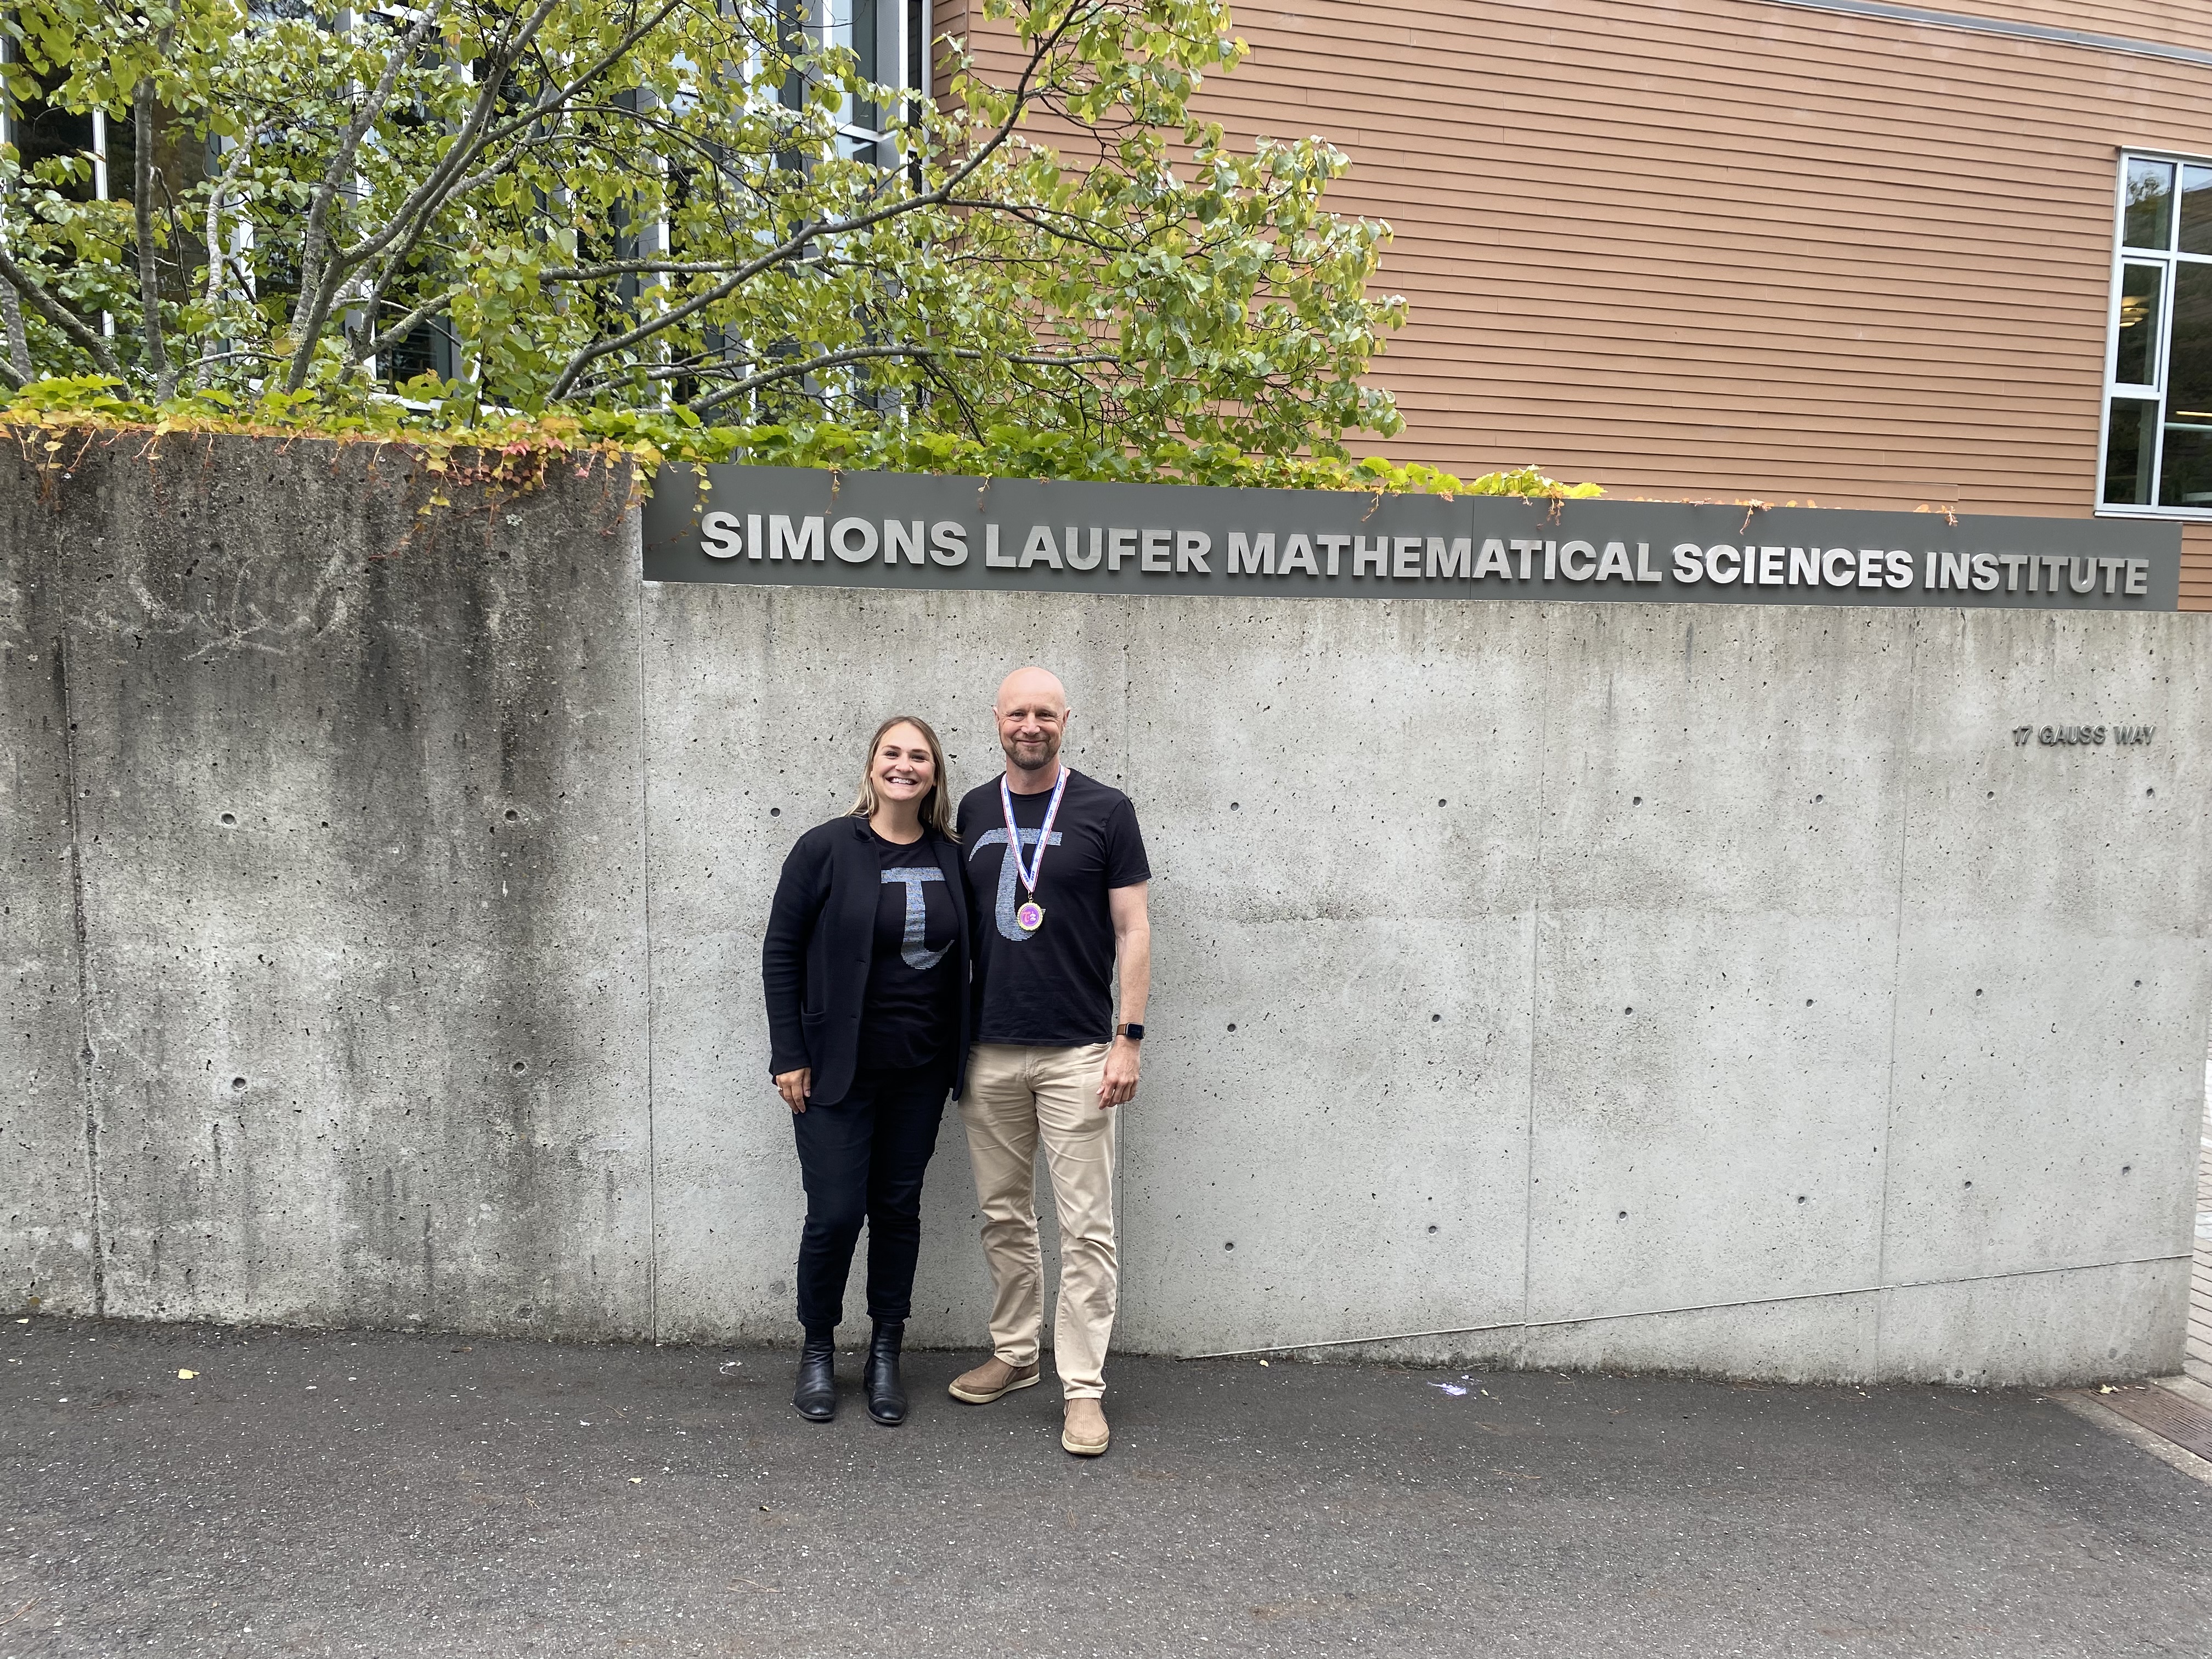 Michael Hartl with Uta Lorenzen at SLMath